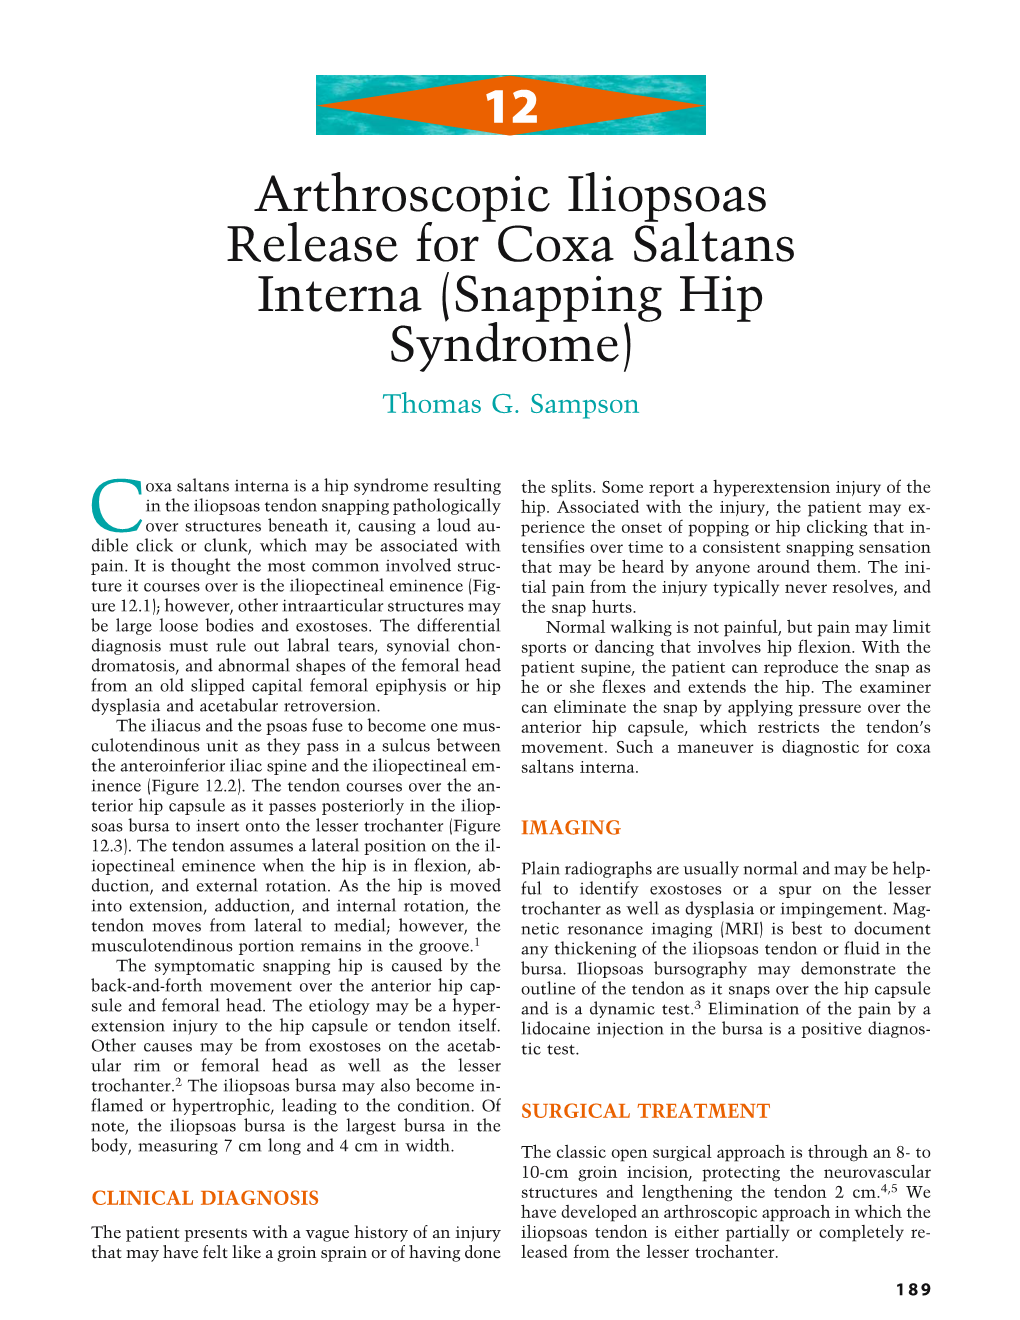 Snapping Hip Syndrome) Thomas G